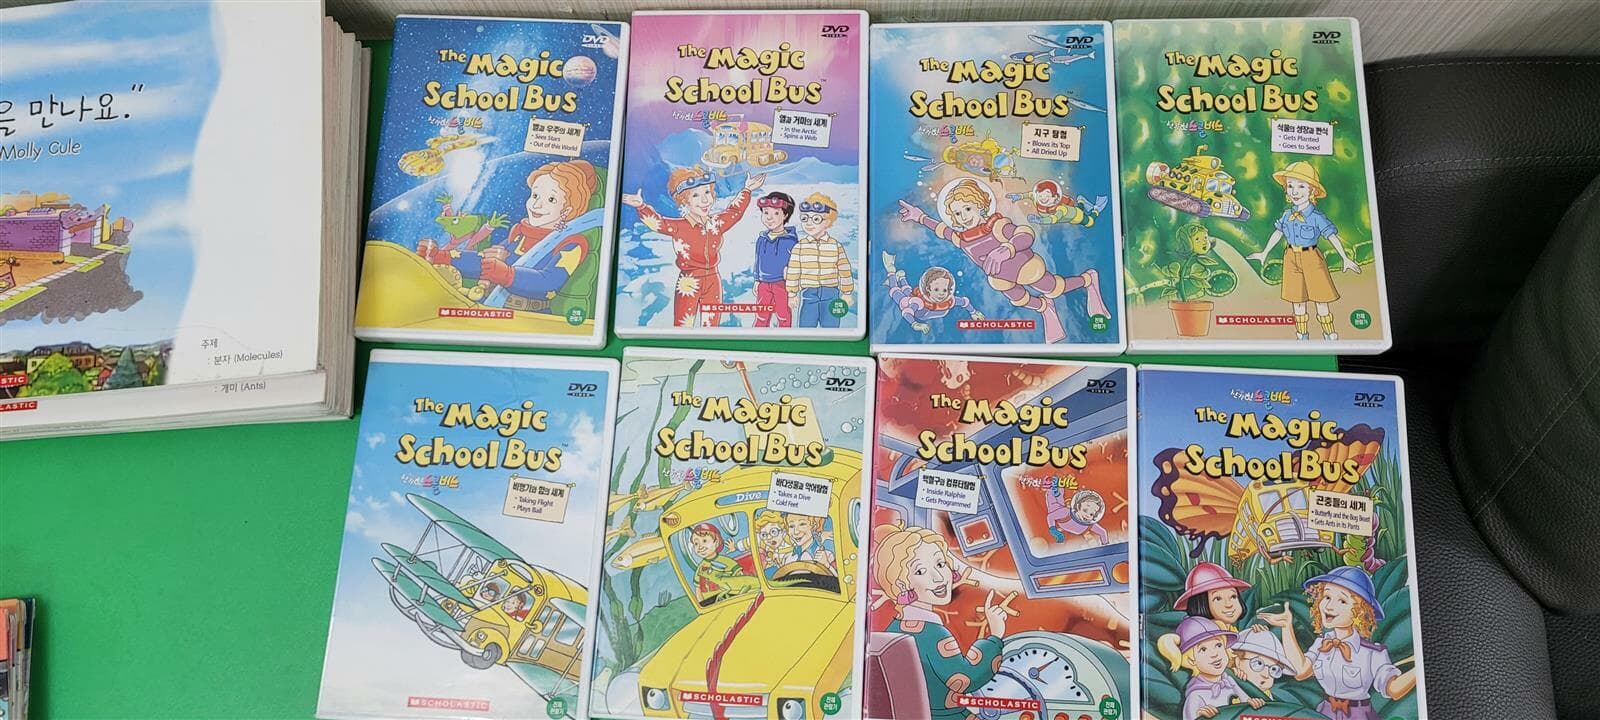 The Magic School Bus(큰책사이즈/영한완역대본)페이퍼북16권 + CD14장 + DVD 8장